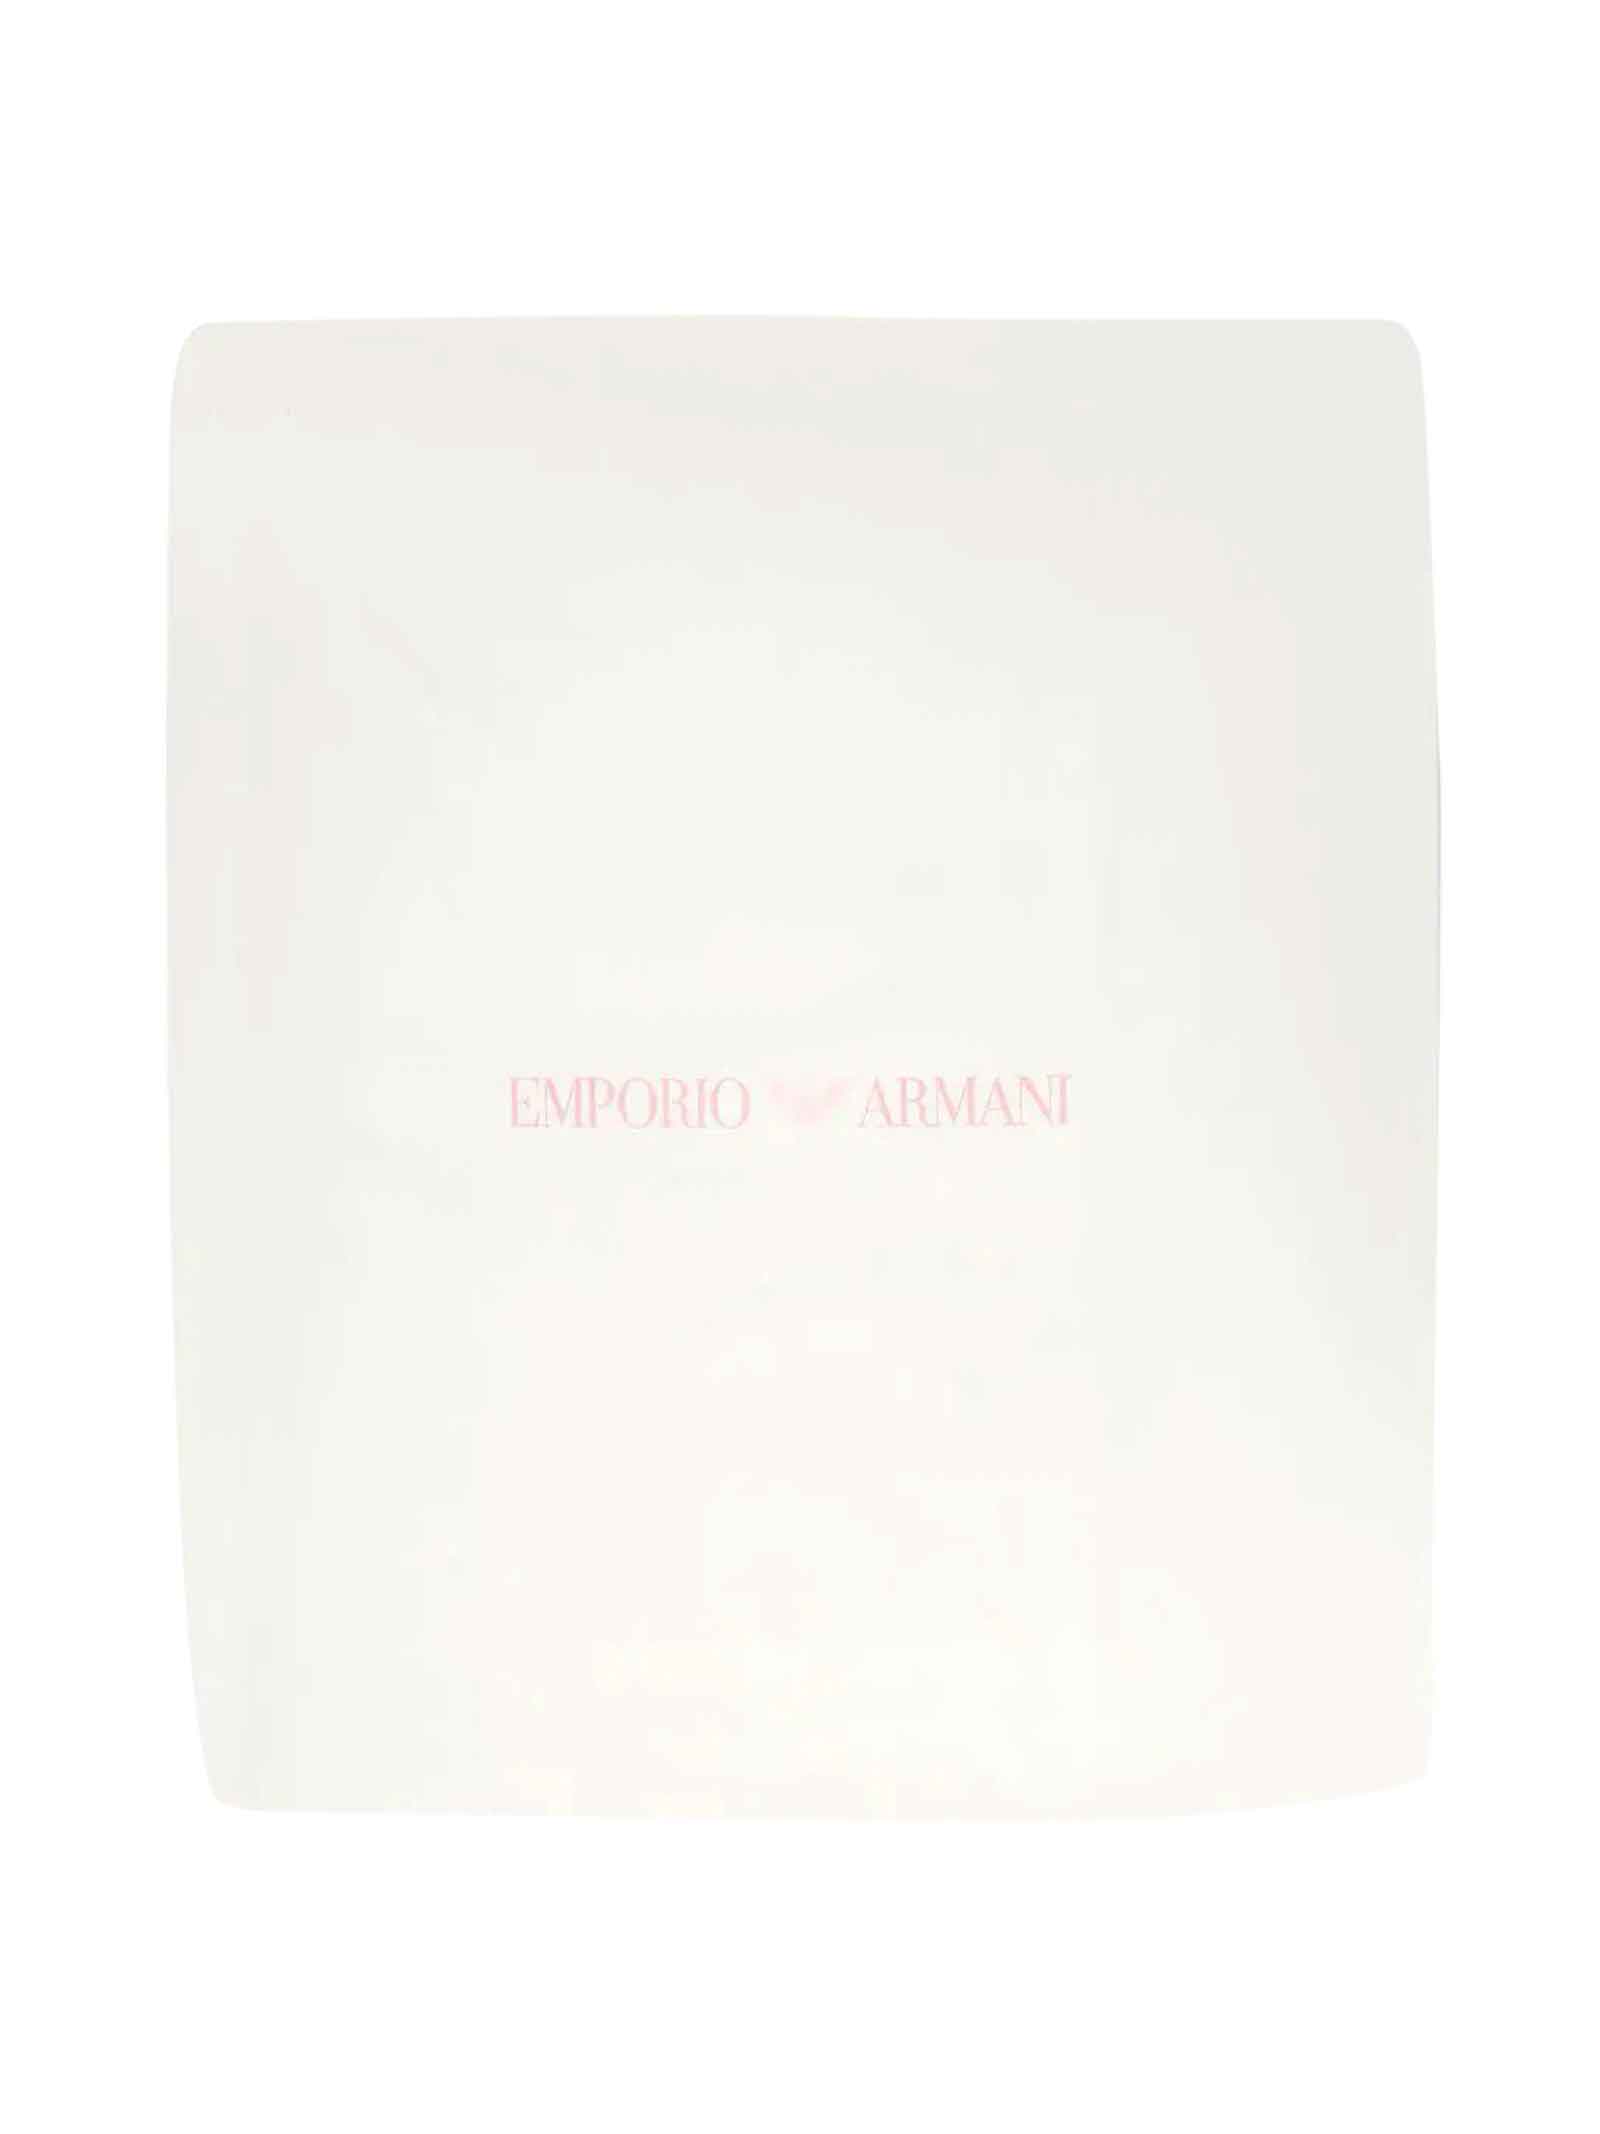 Emporio Armani Pink Blanket